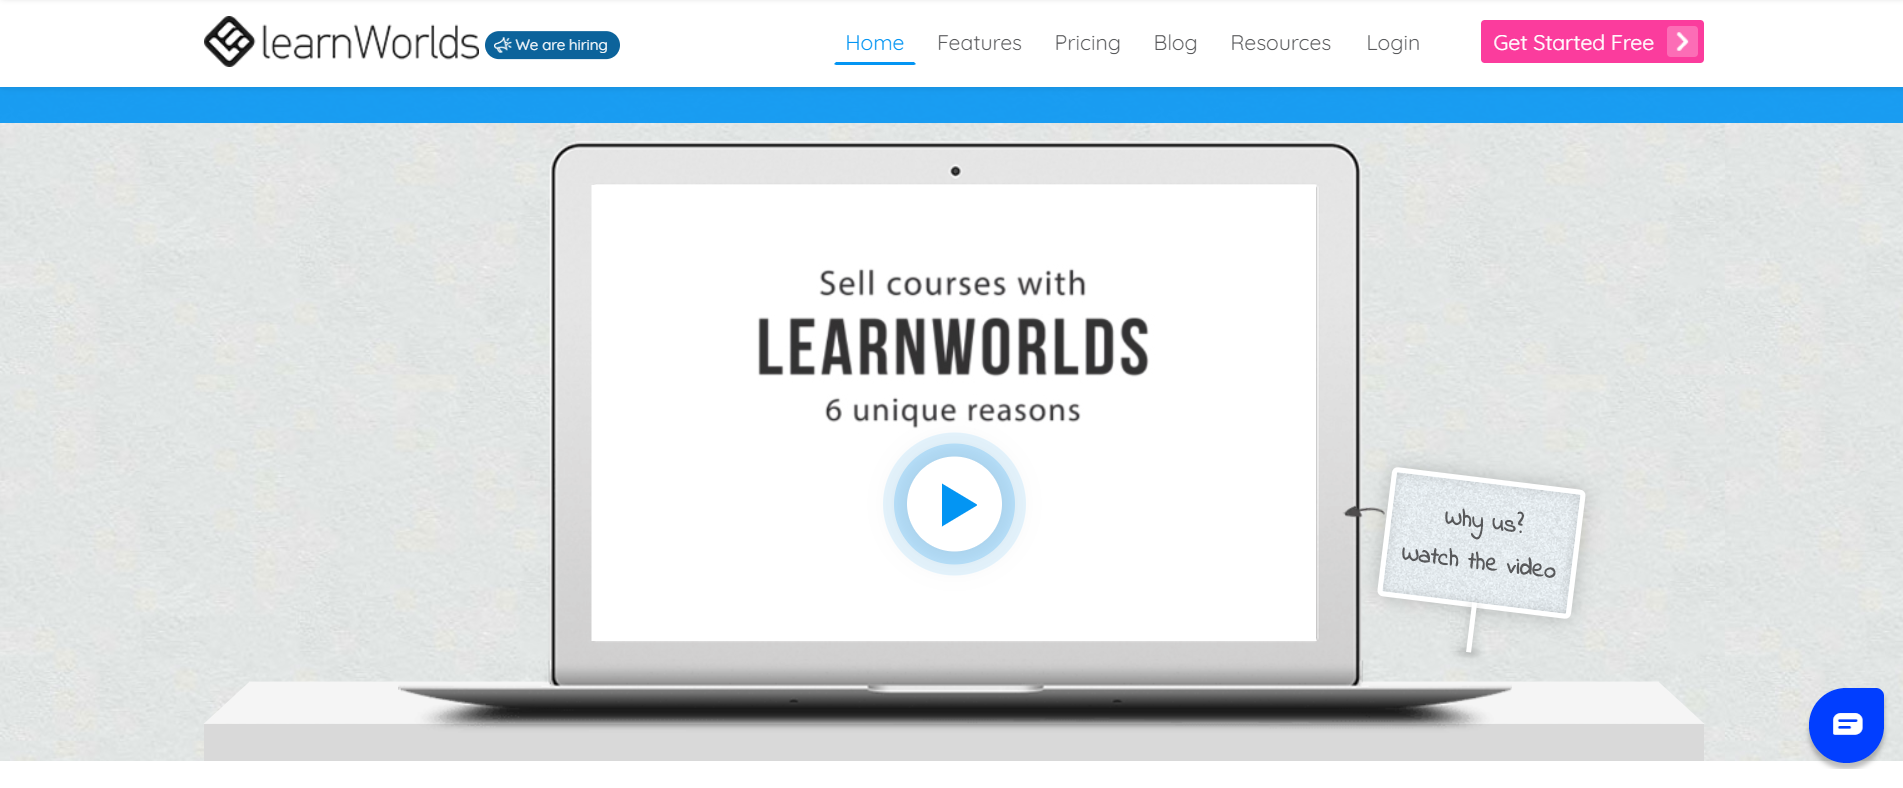 LearnWorld 概述：LearnWorlds 与 Podia